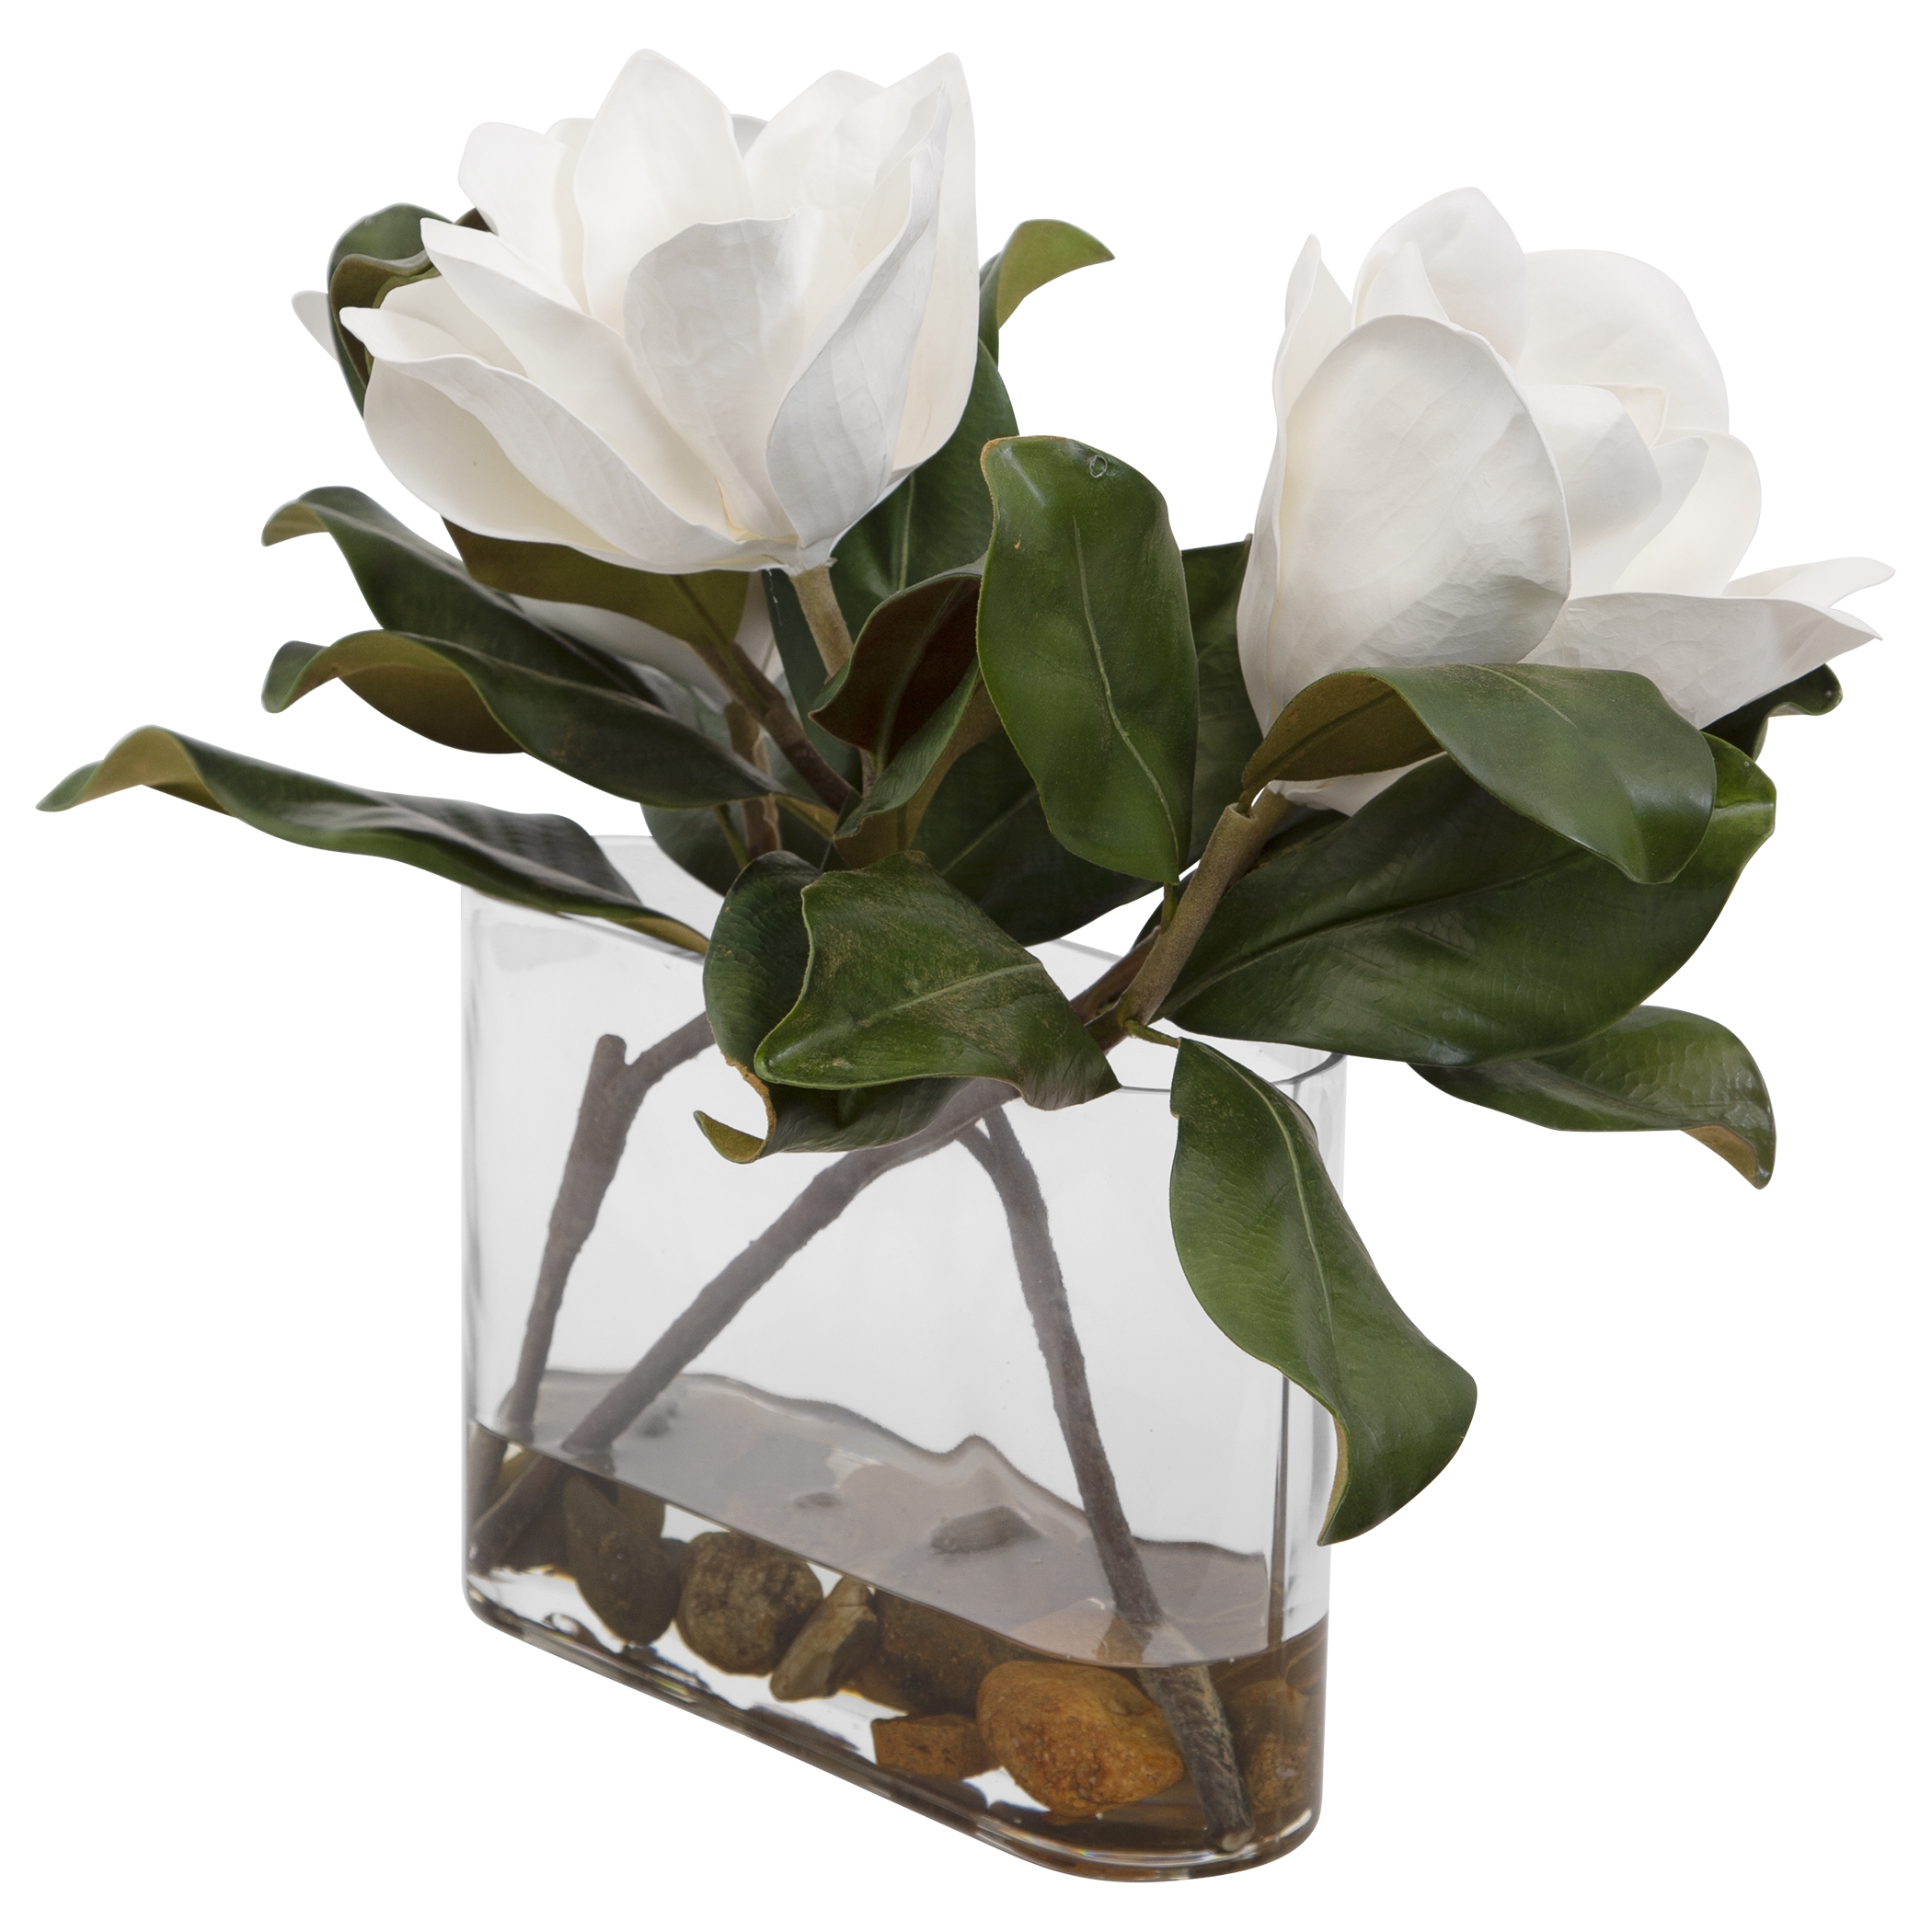 Middleton Magnolia Flower Centerpiece - Image 2